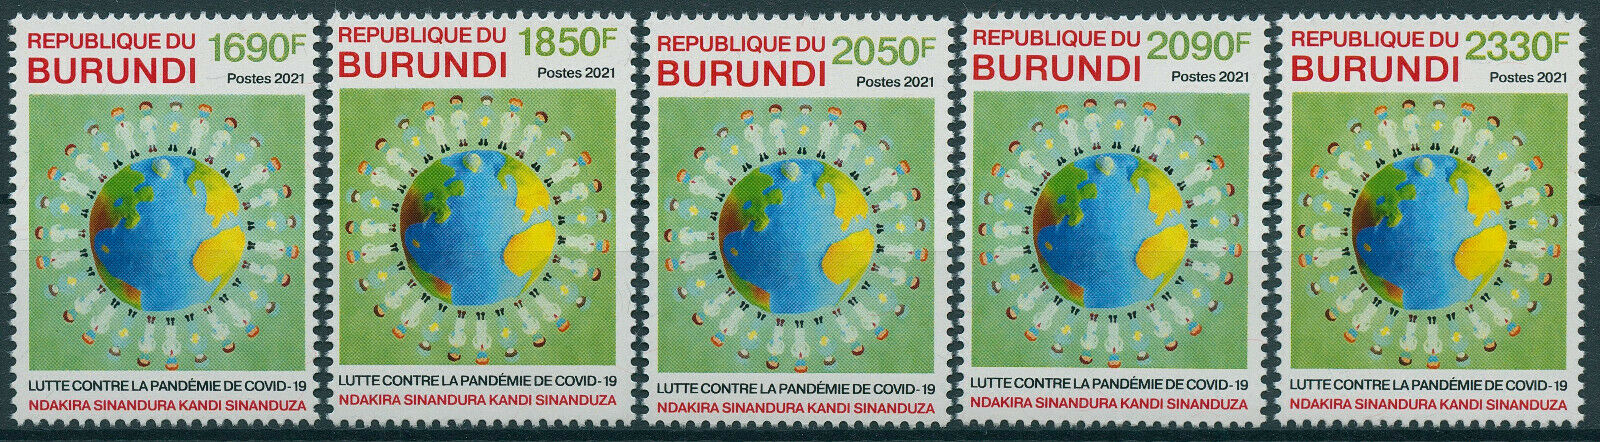 Burundi 2021 MNH Medical Stamps Corona Pandemic Covid-19 Covid 5v Set